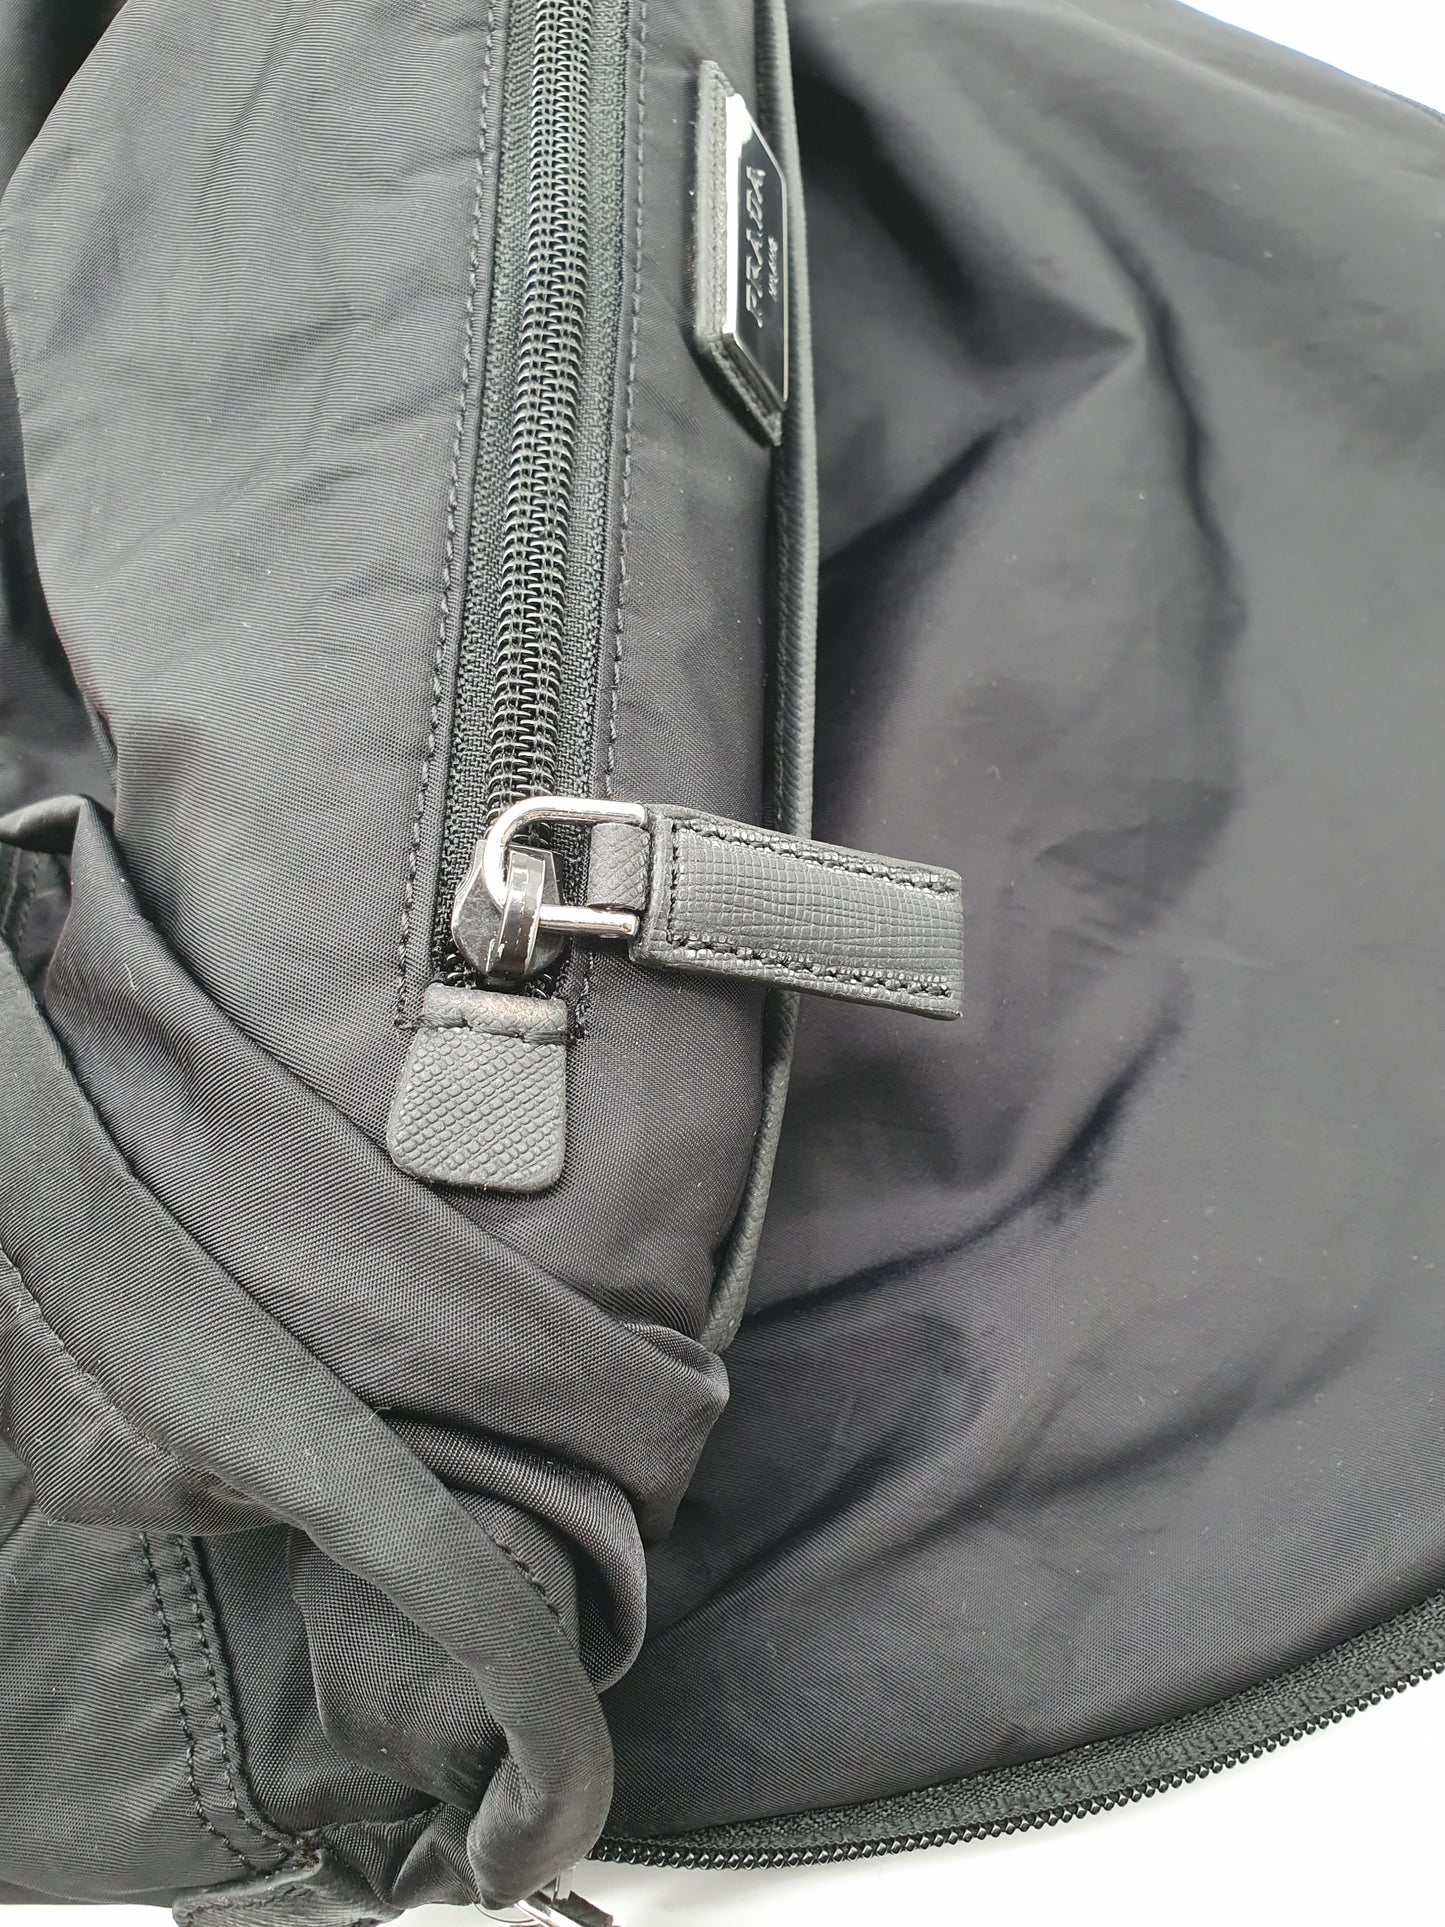 Prada nylon backpack